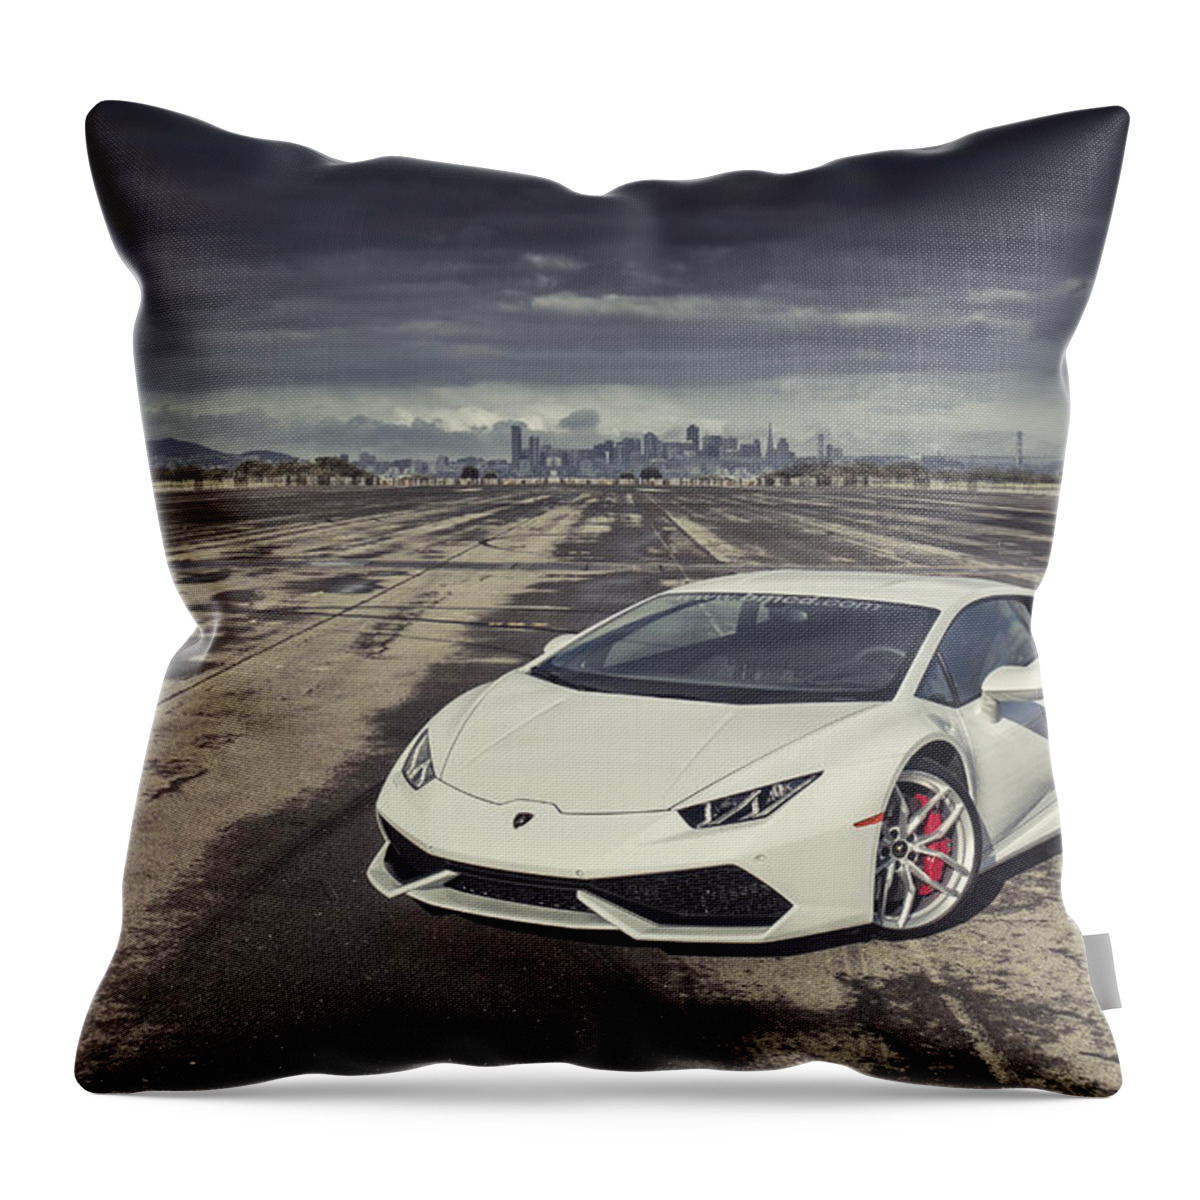 Lamborghini Throw Pillow featuring the photograph Lamborghini Huracan #1 by ItzKirb Photography